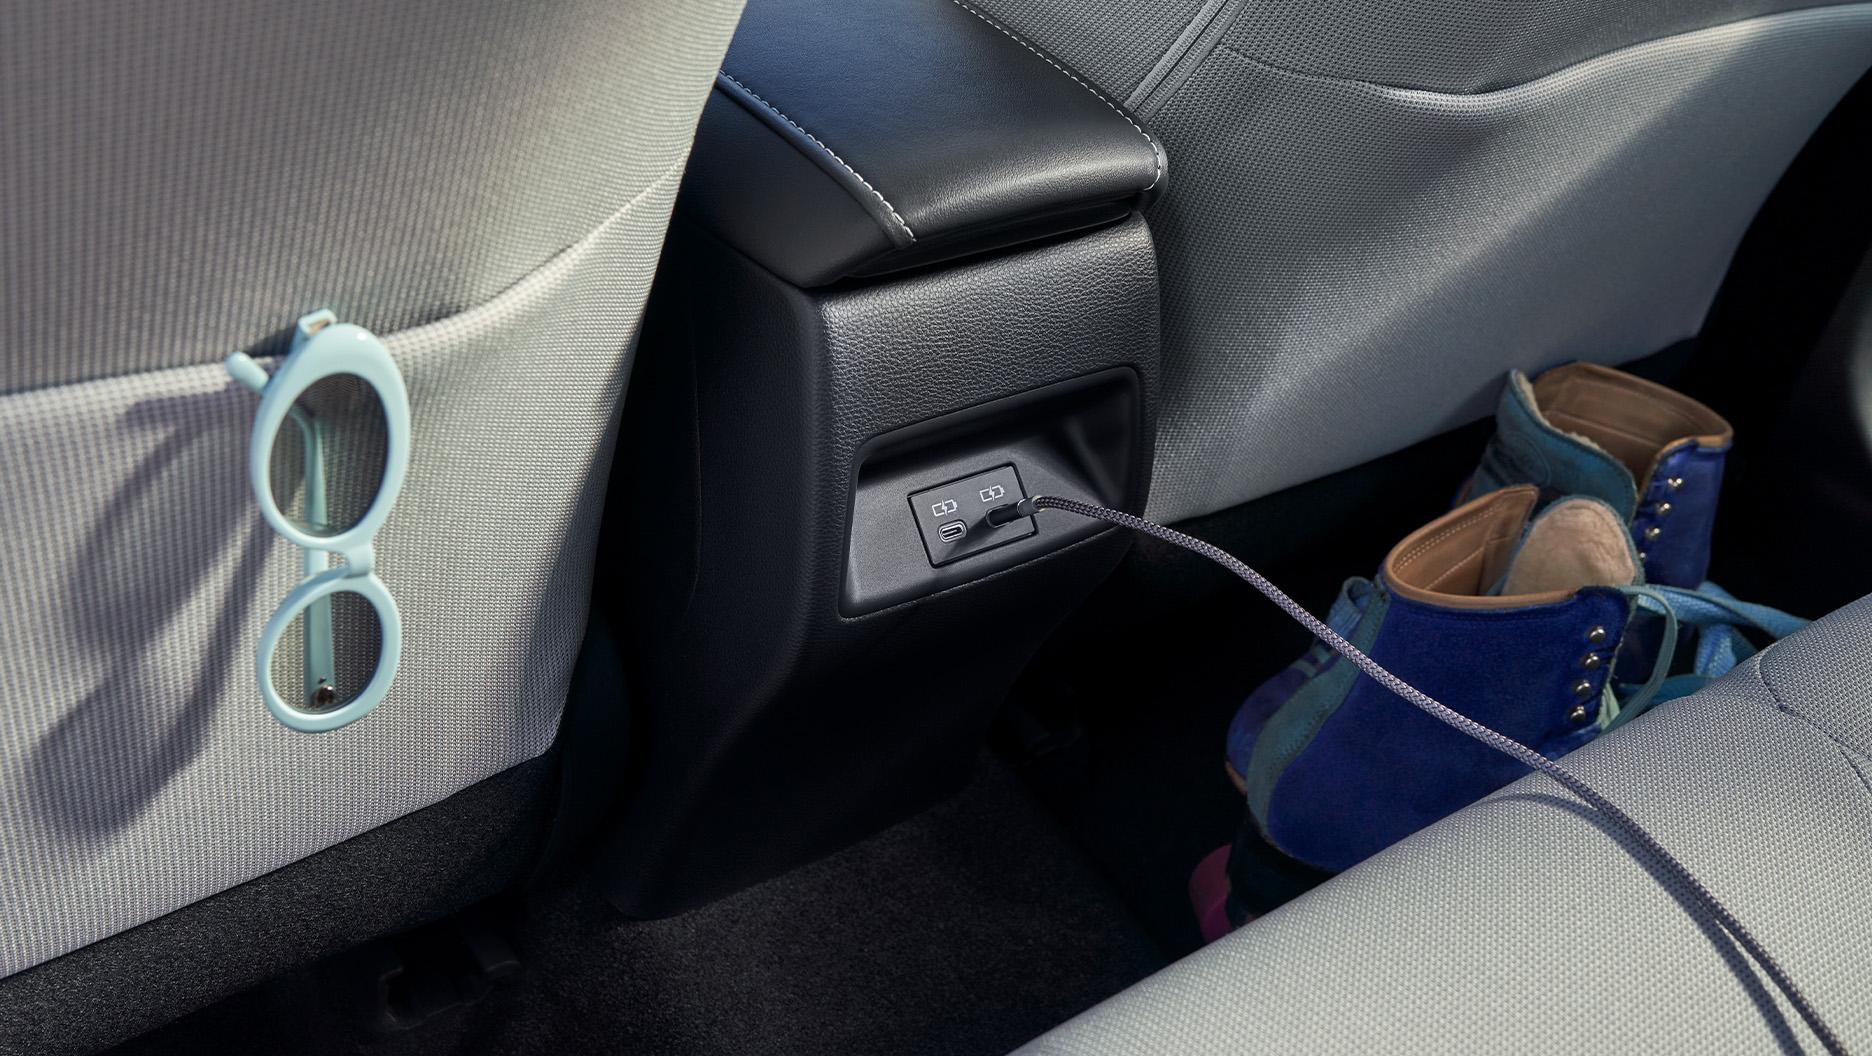 Toyota Corolla Hatchback rear charging ports